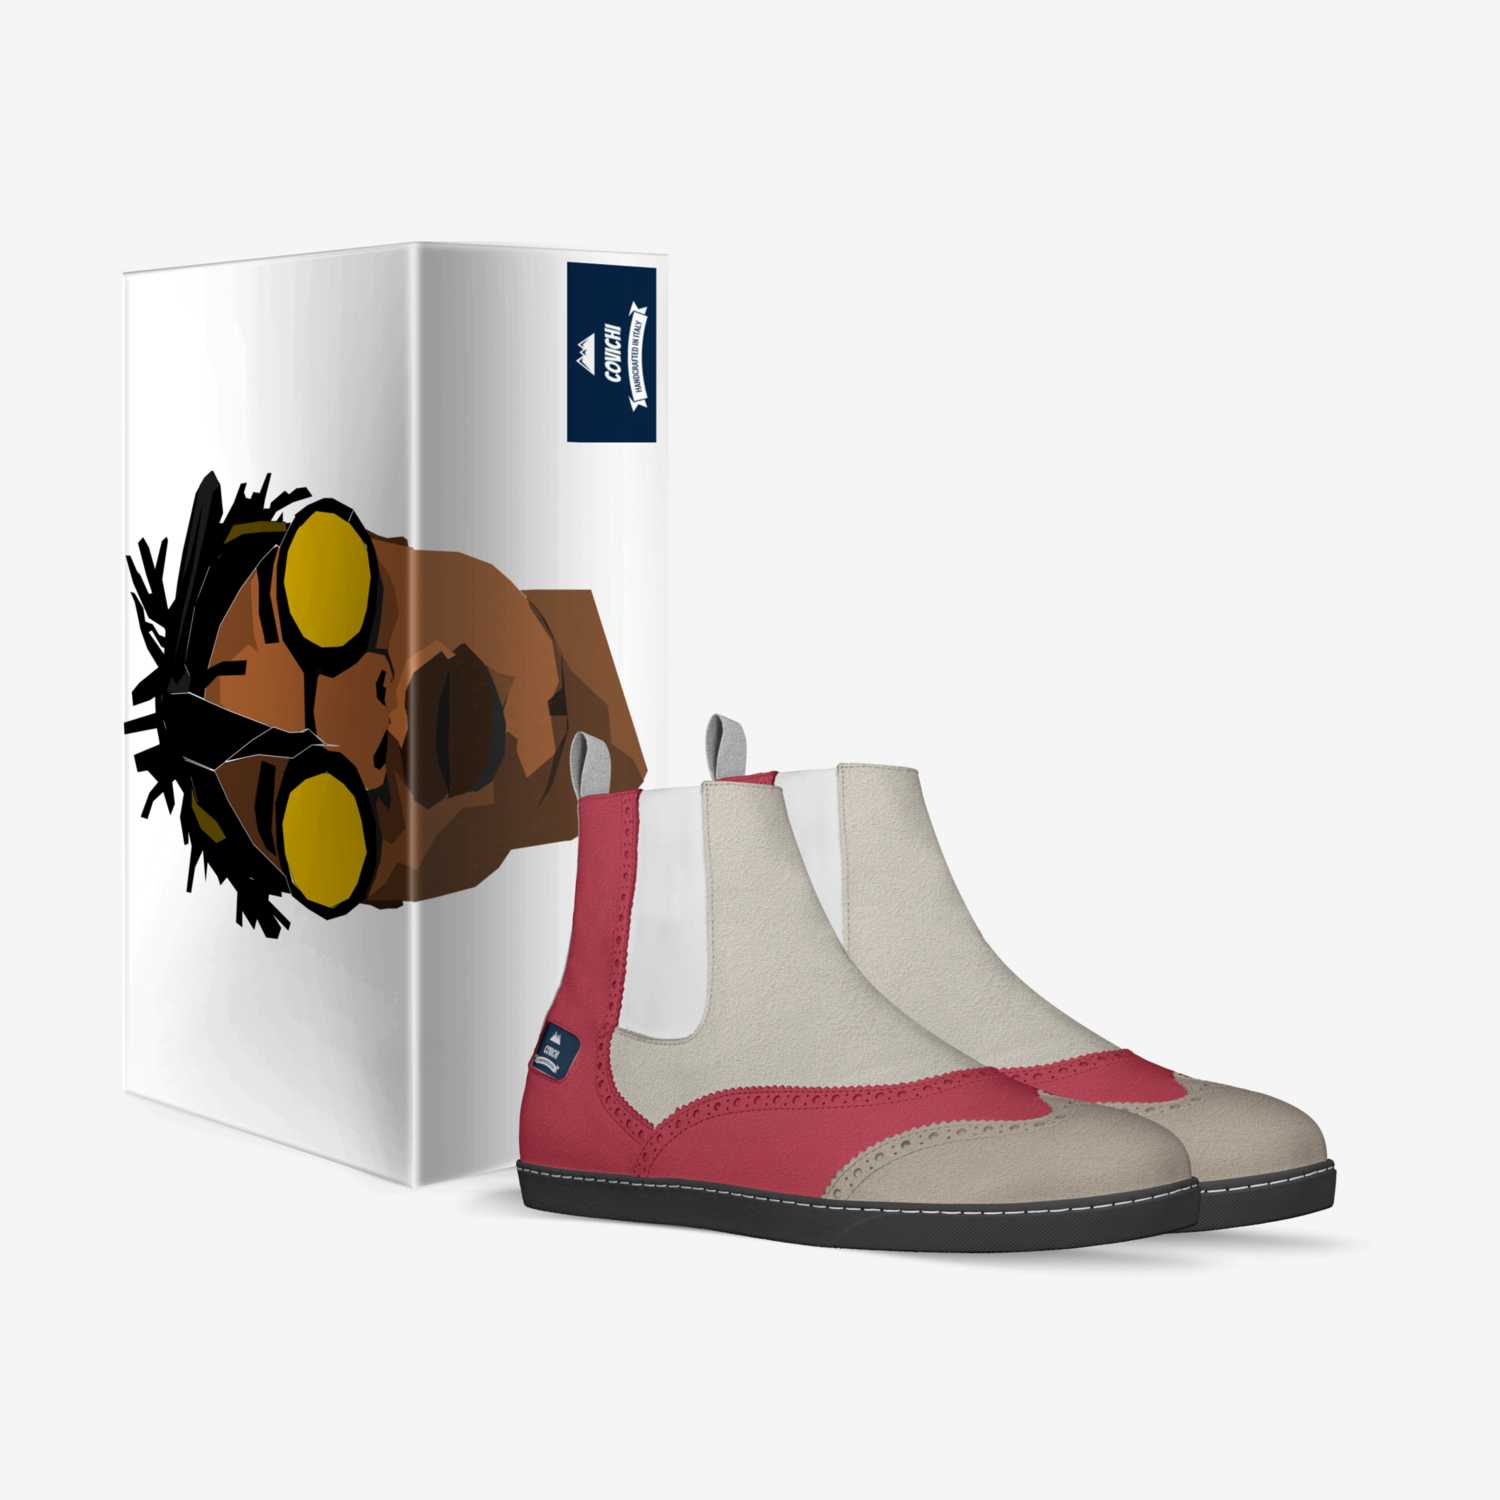 Covichi custom made in Italy shoes by Santana Doe | Box view